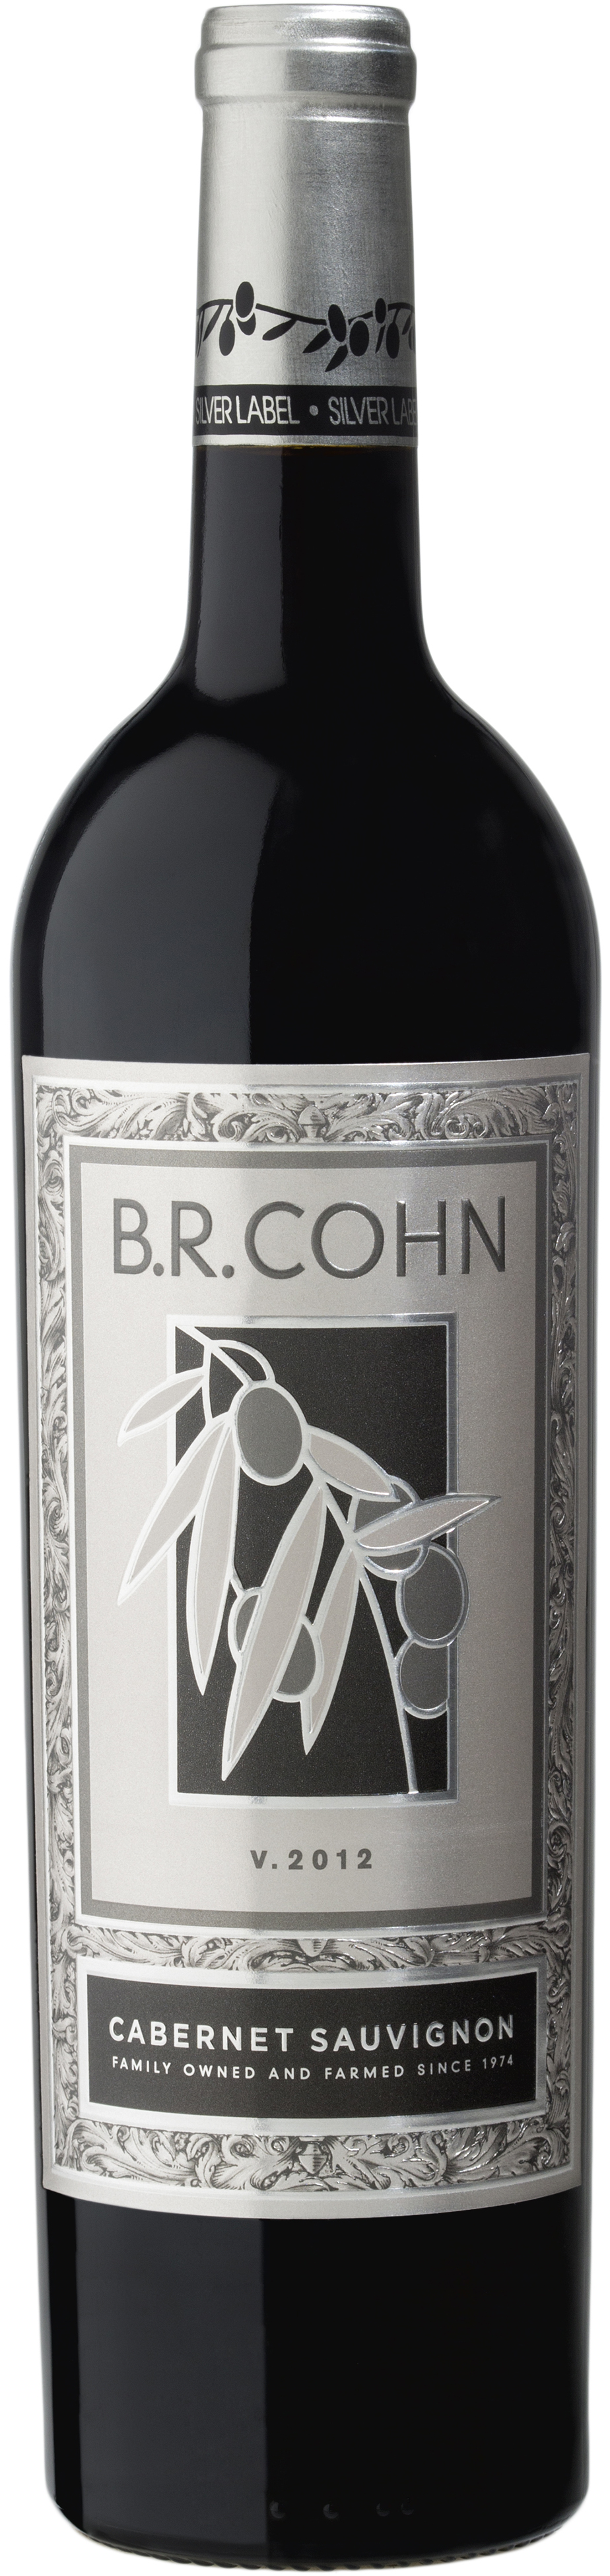 2014 BR Cohn Silver Label Cabernet Sauvignon image